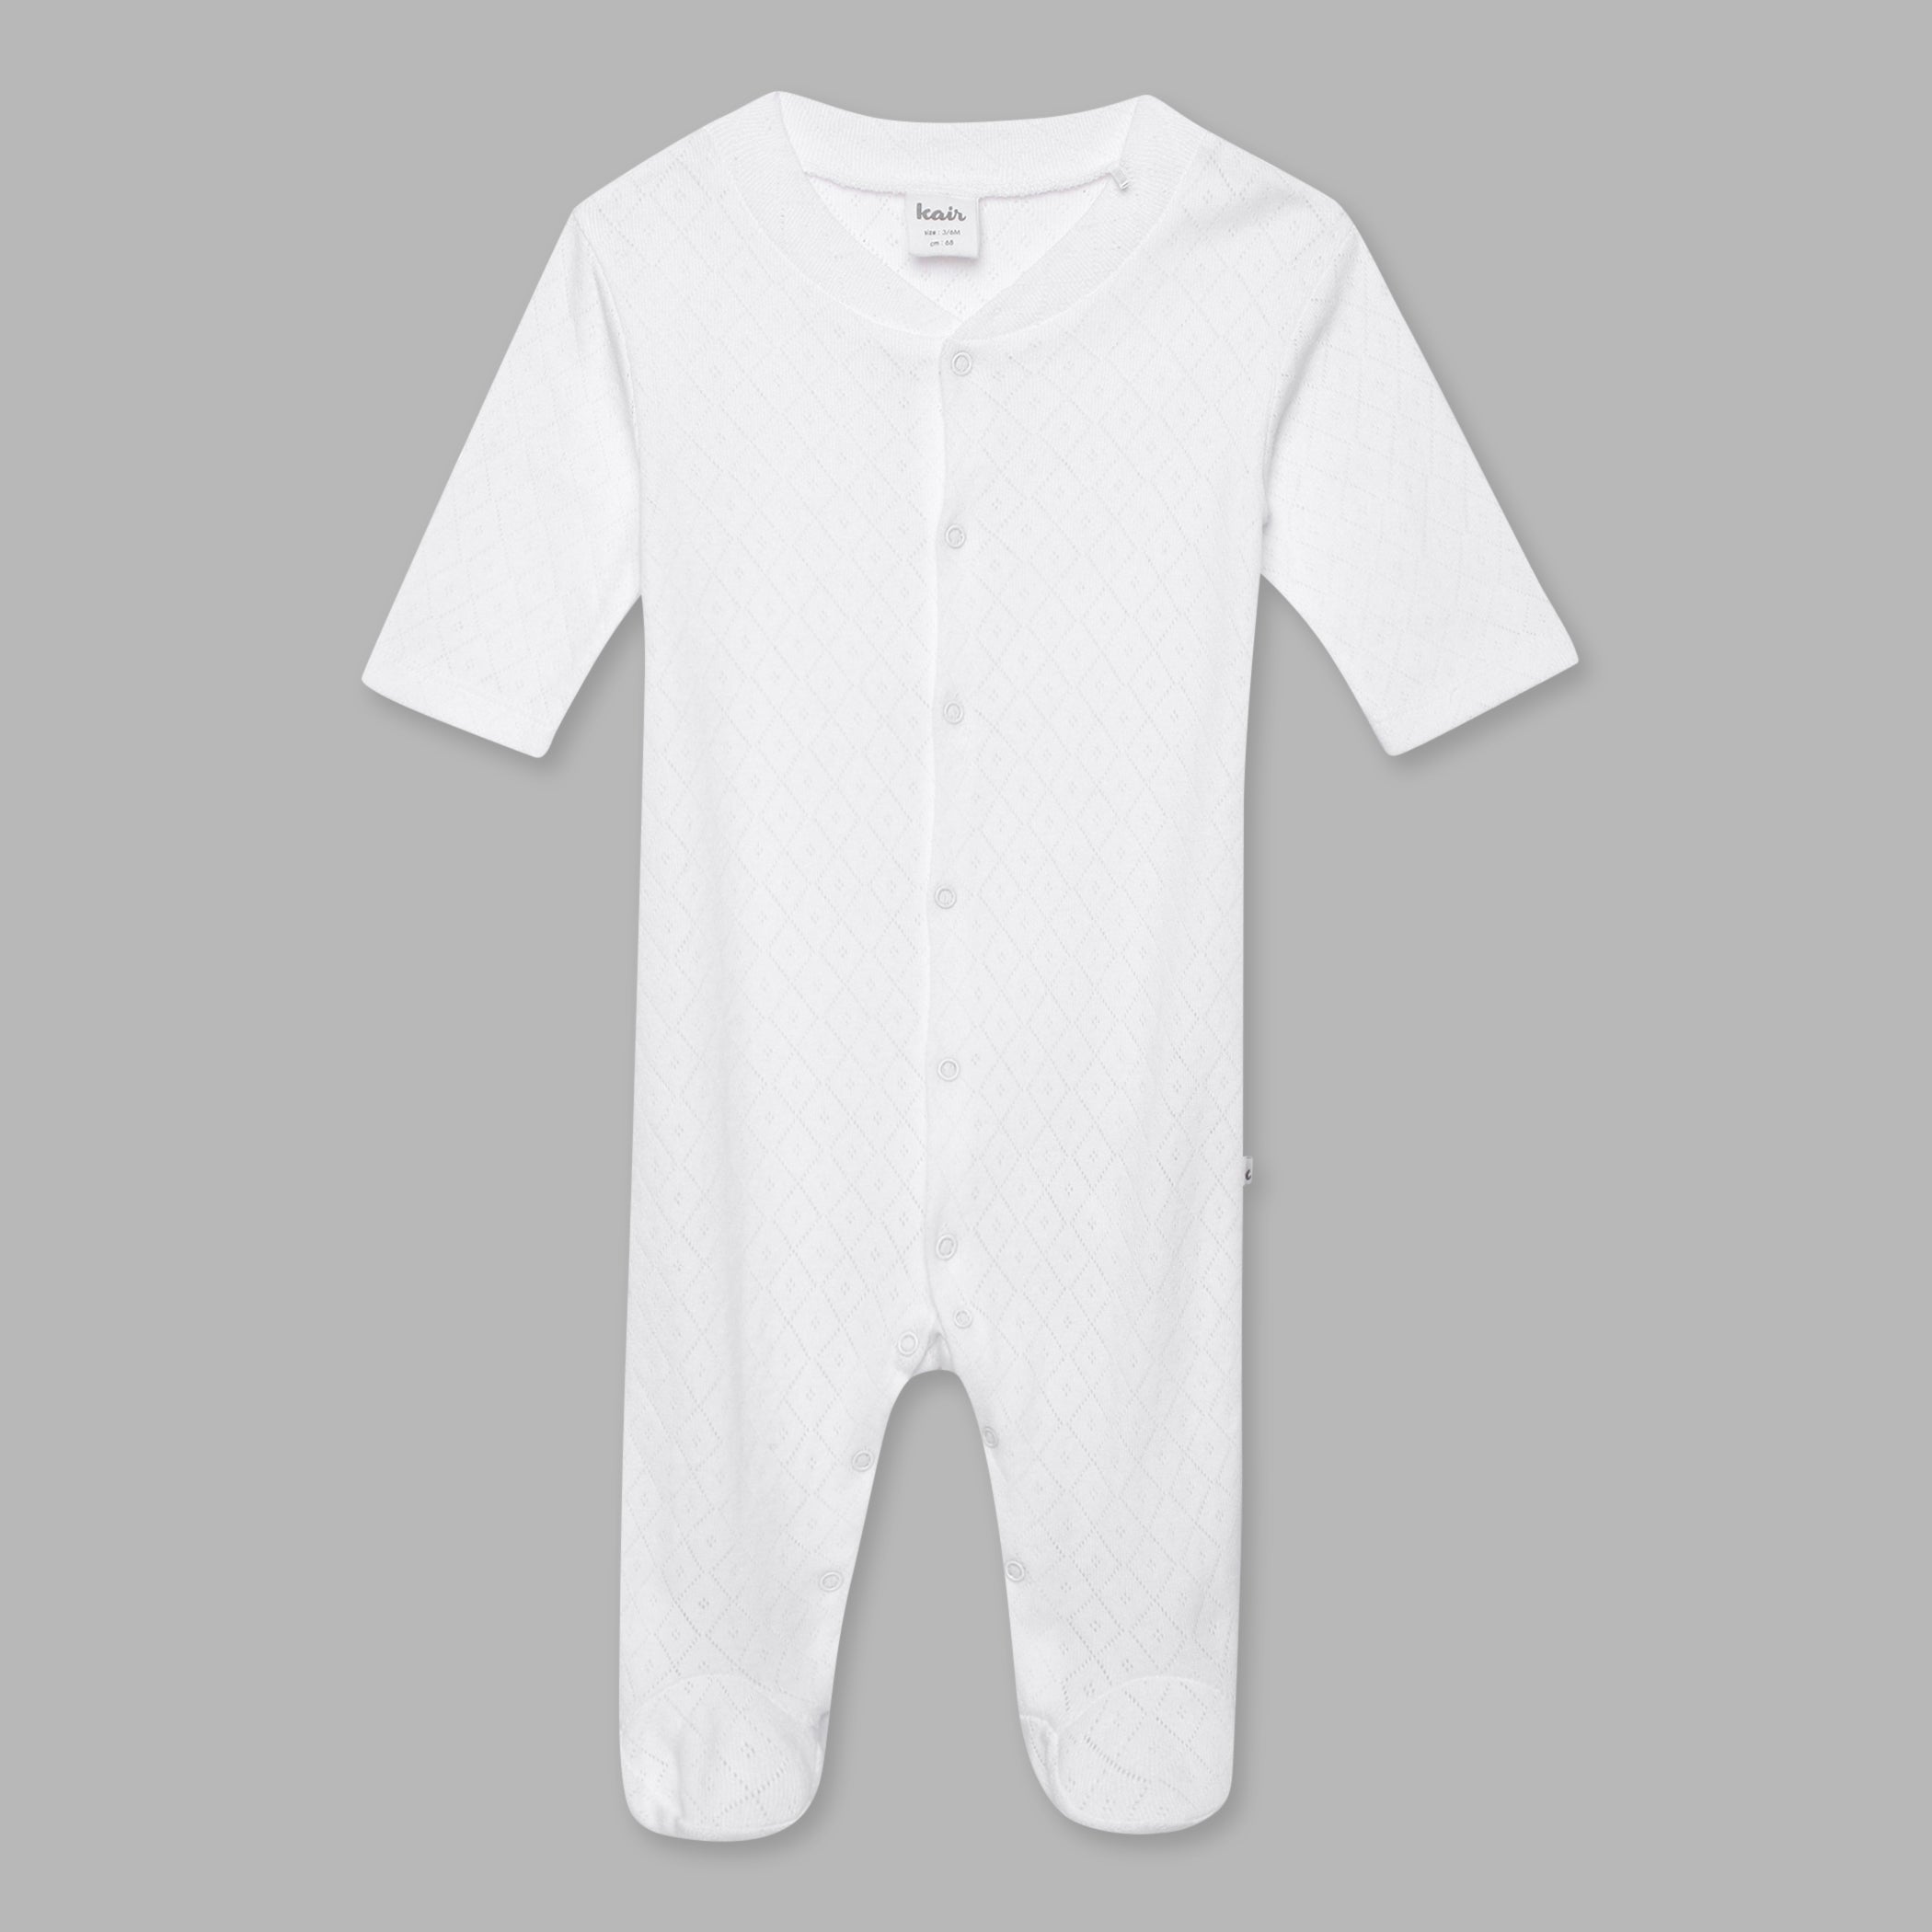 Babies White Full Sleeve Sleepsuit